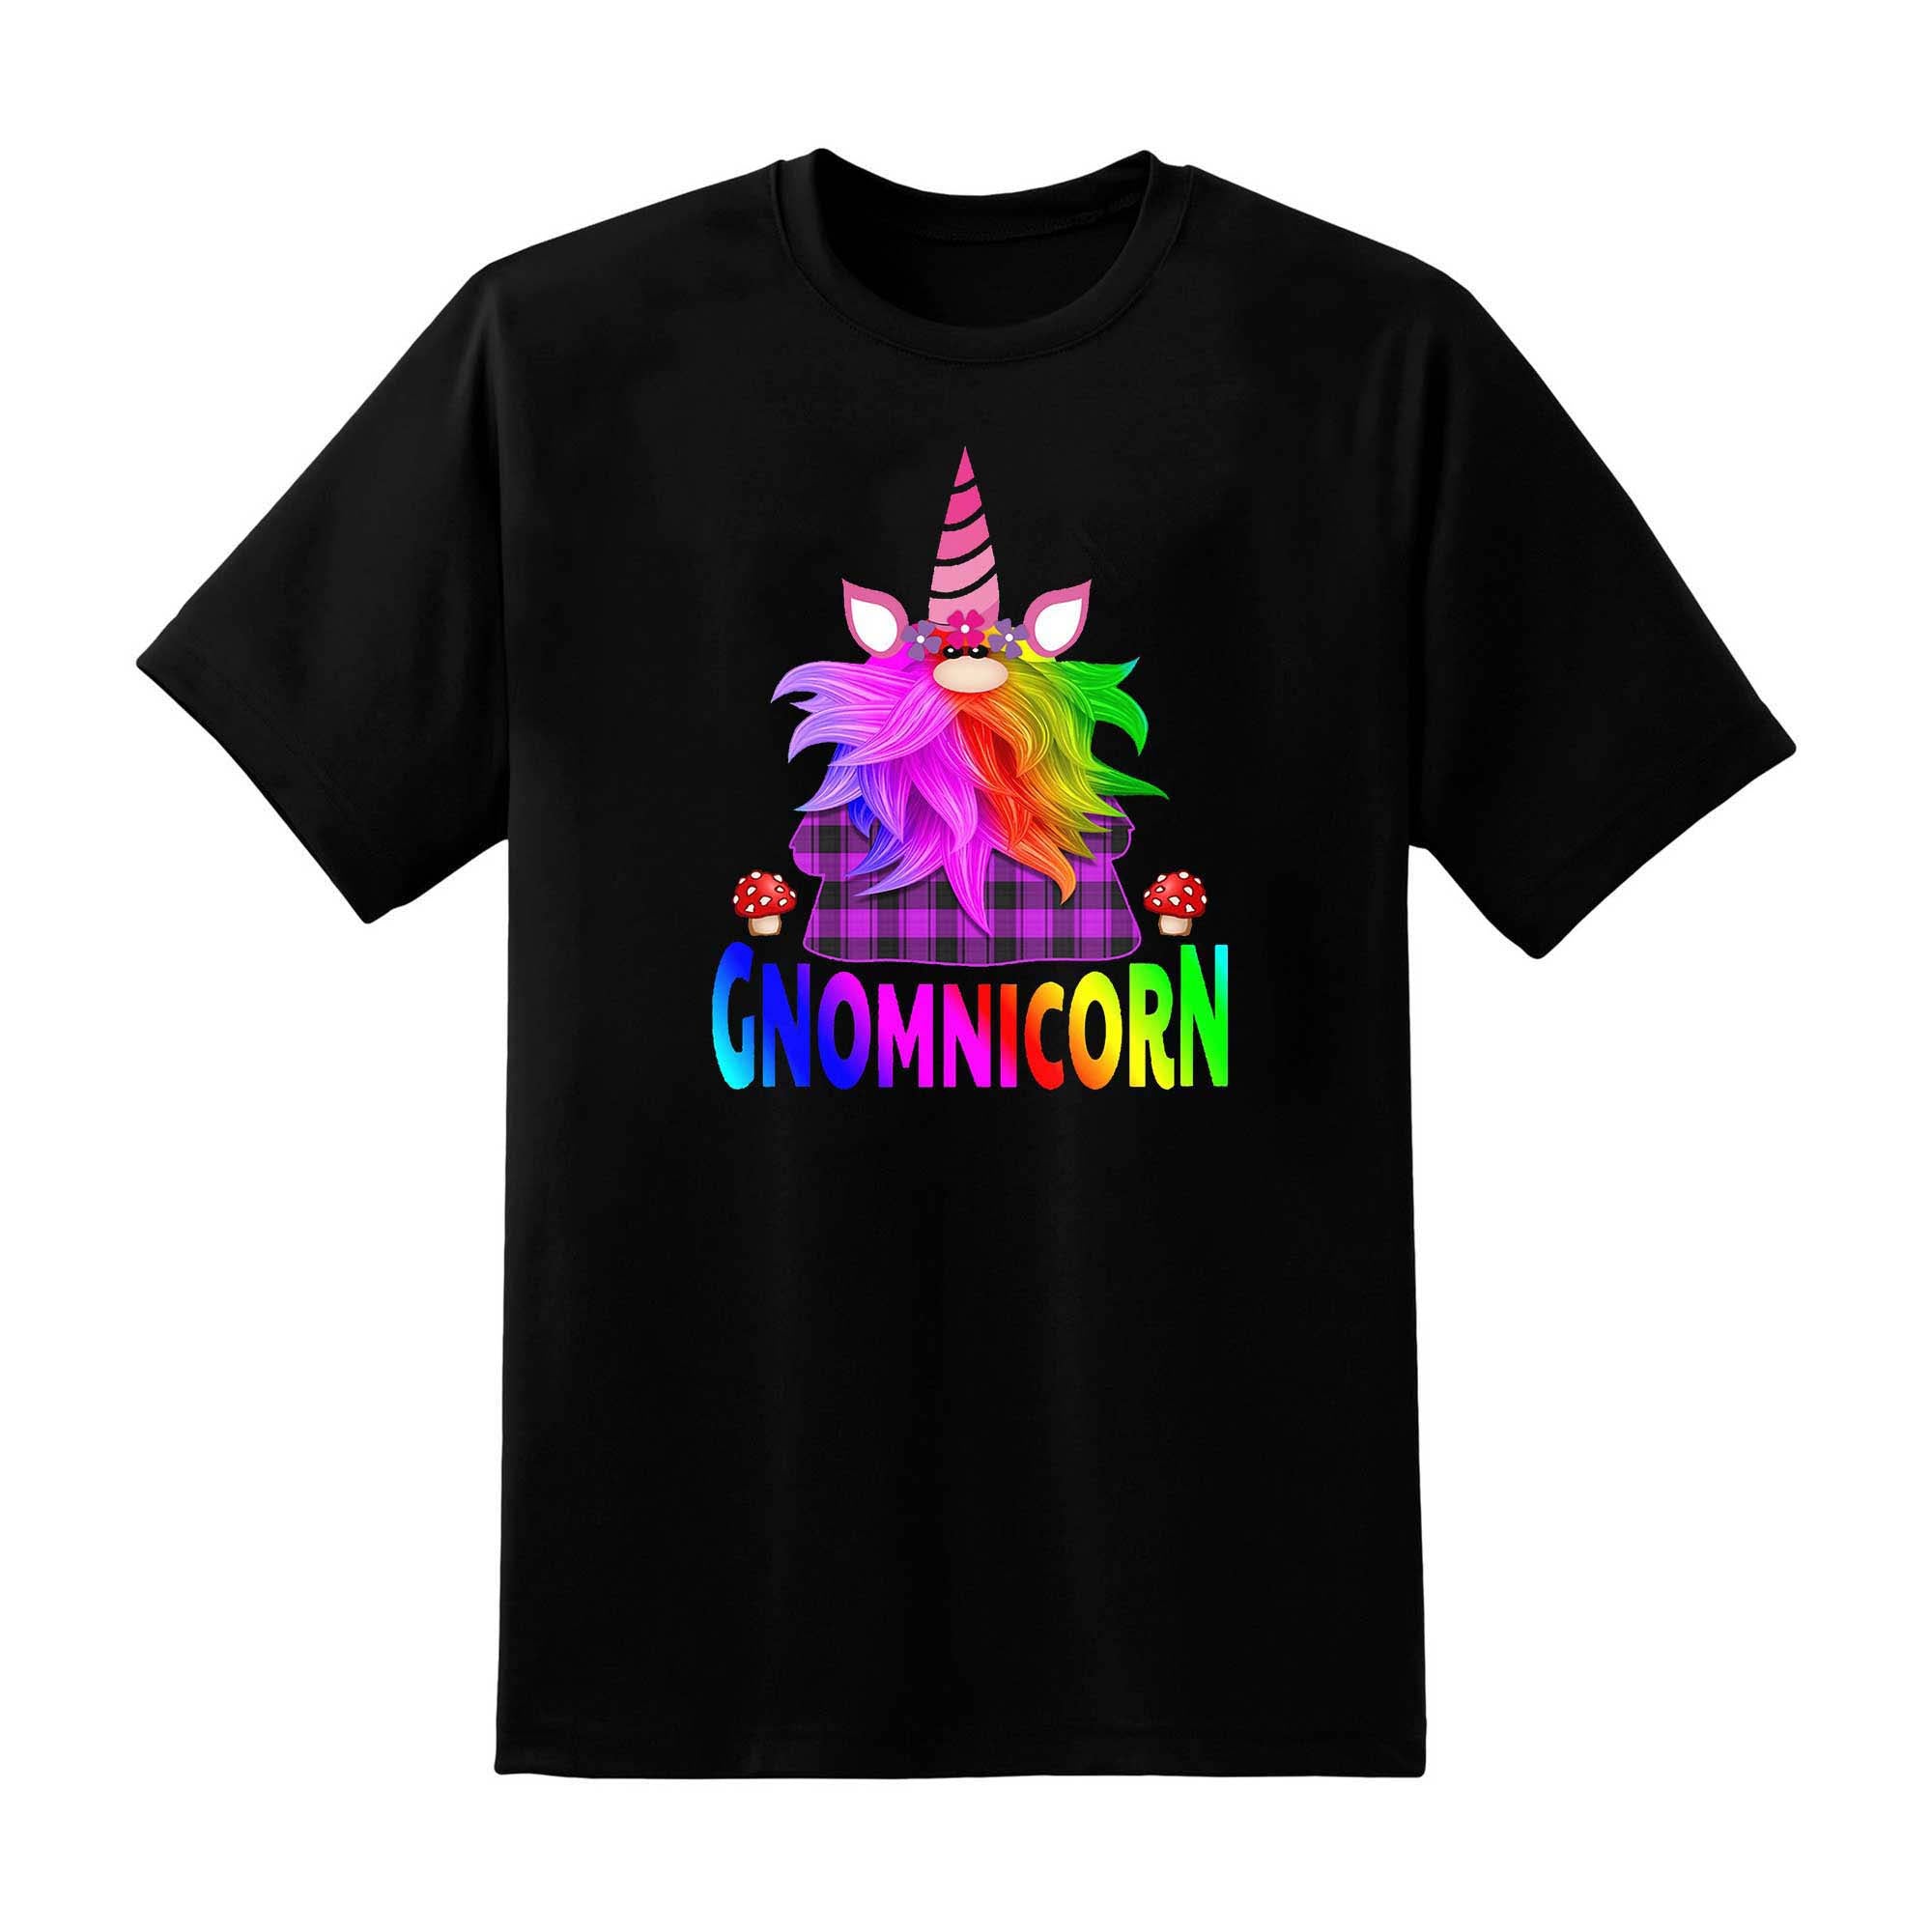 Skitongift Skitongift Plaid Gnomes Unicorn Shirt Funny Mushroom Gnomnicorn Accessories Classic T Shirt Funny Shirts